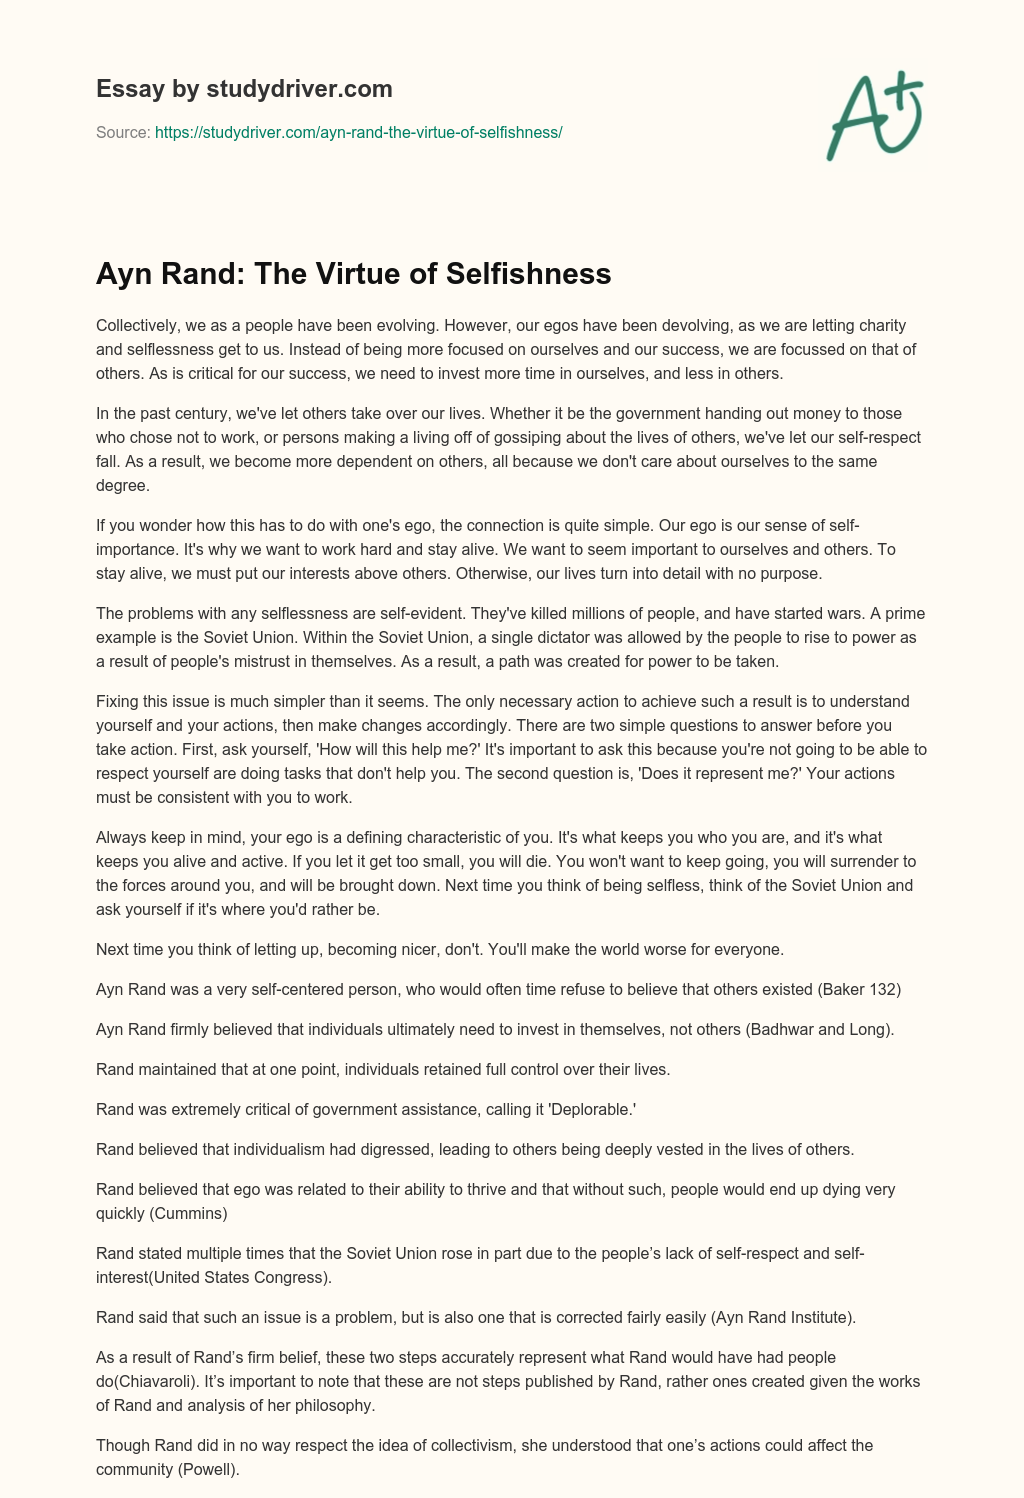 Ayn Rand: the Virtue of Selfishness essay